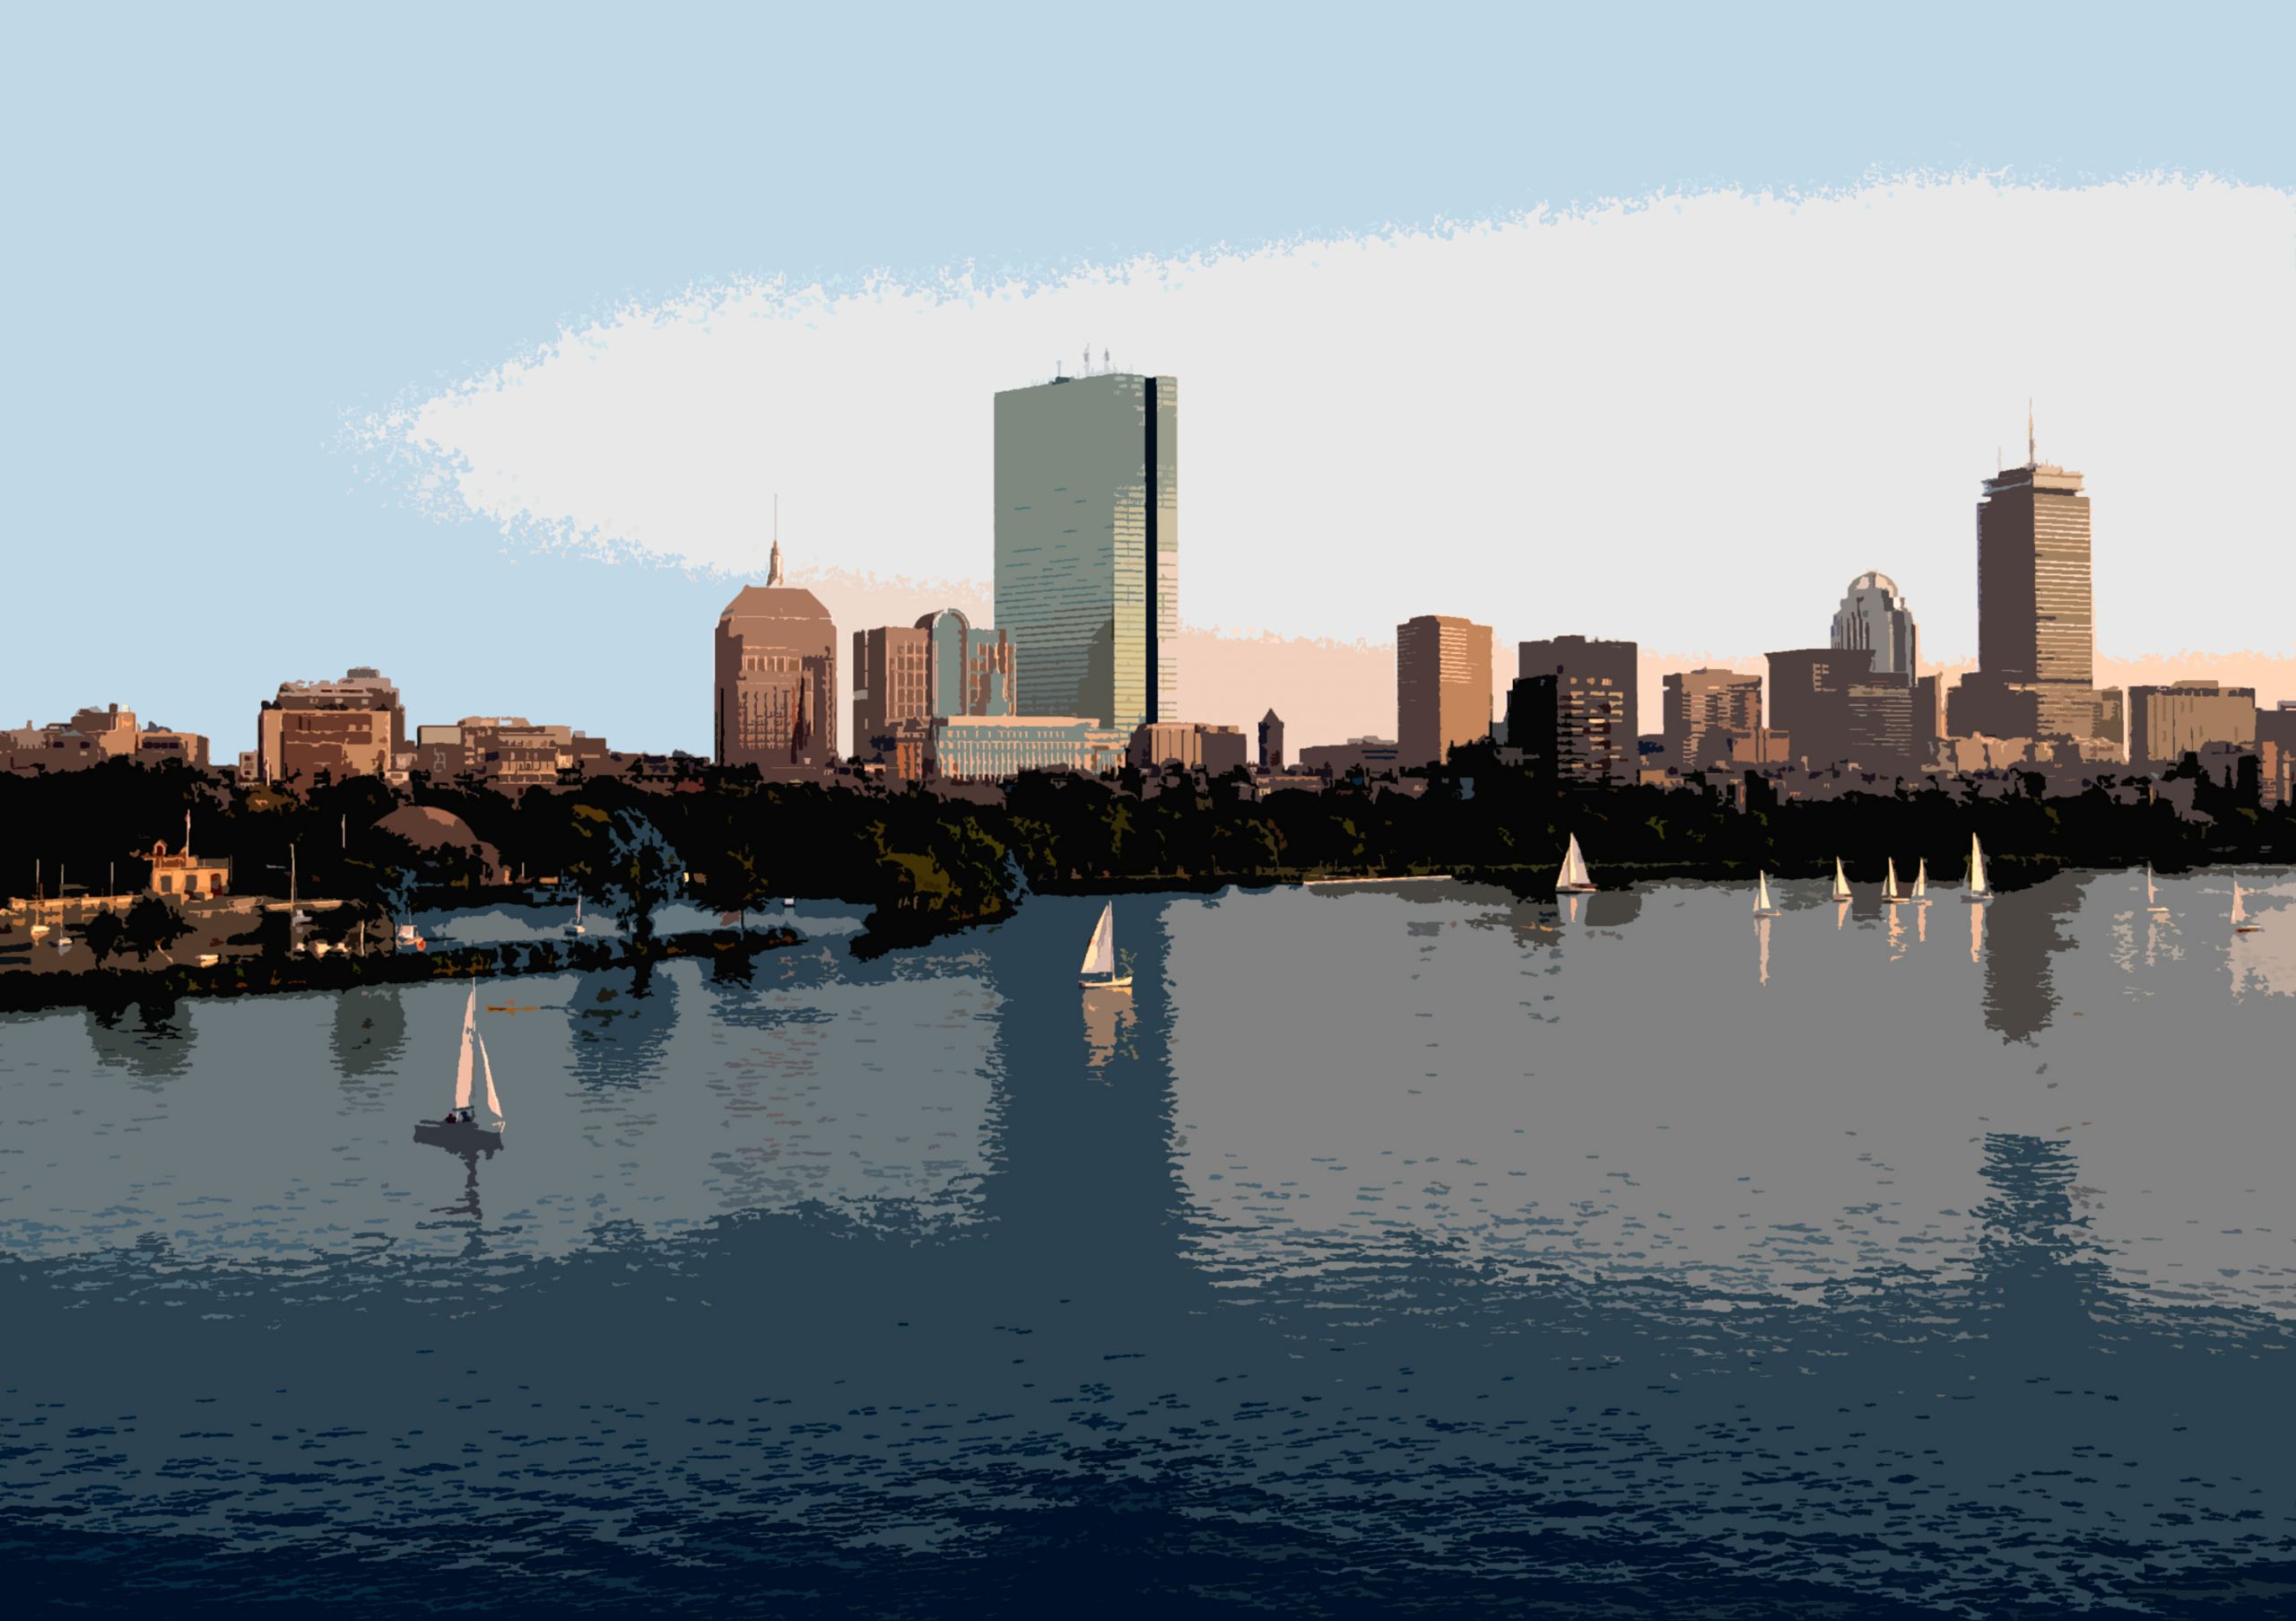 digitally manipulated photograph of the boston back bay skyline by jen matson